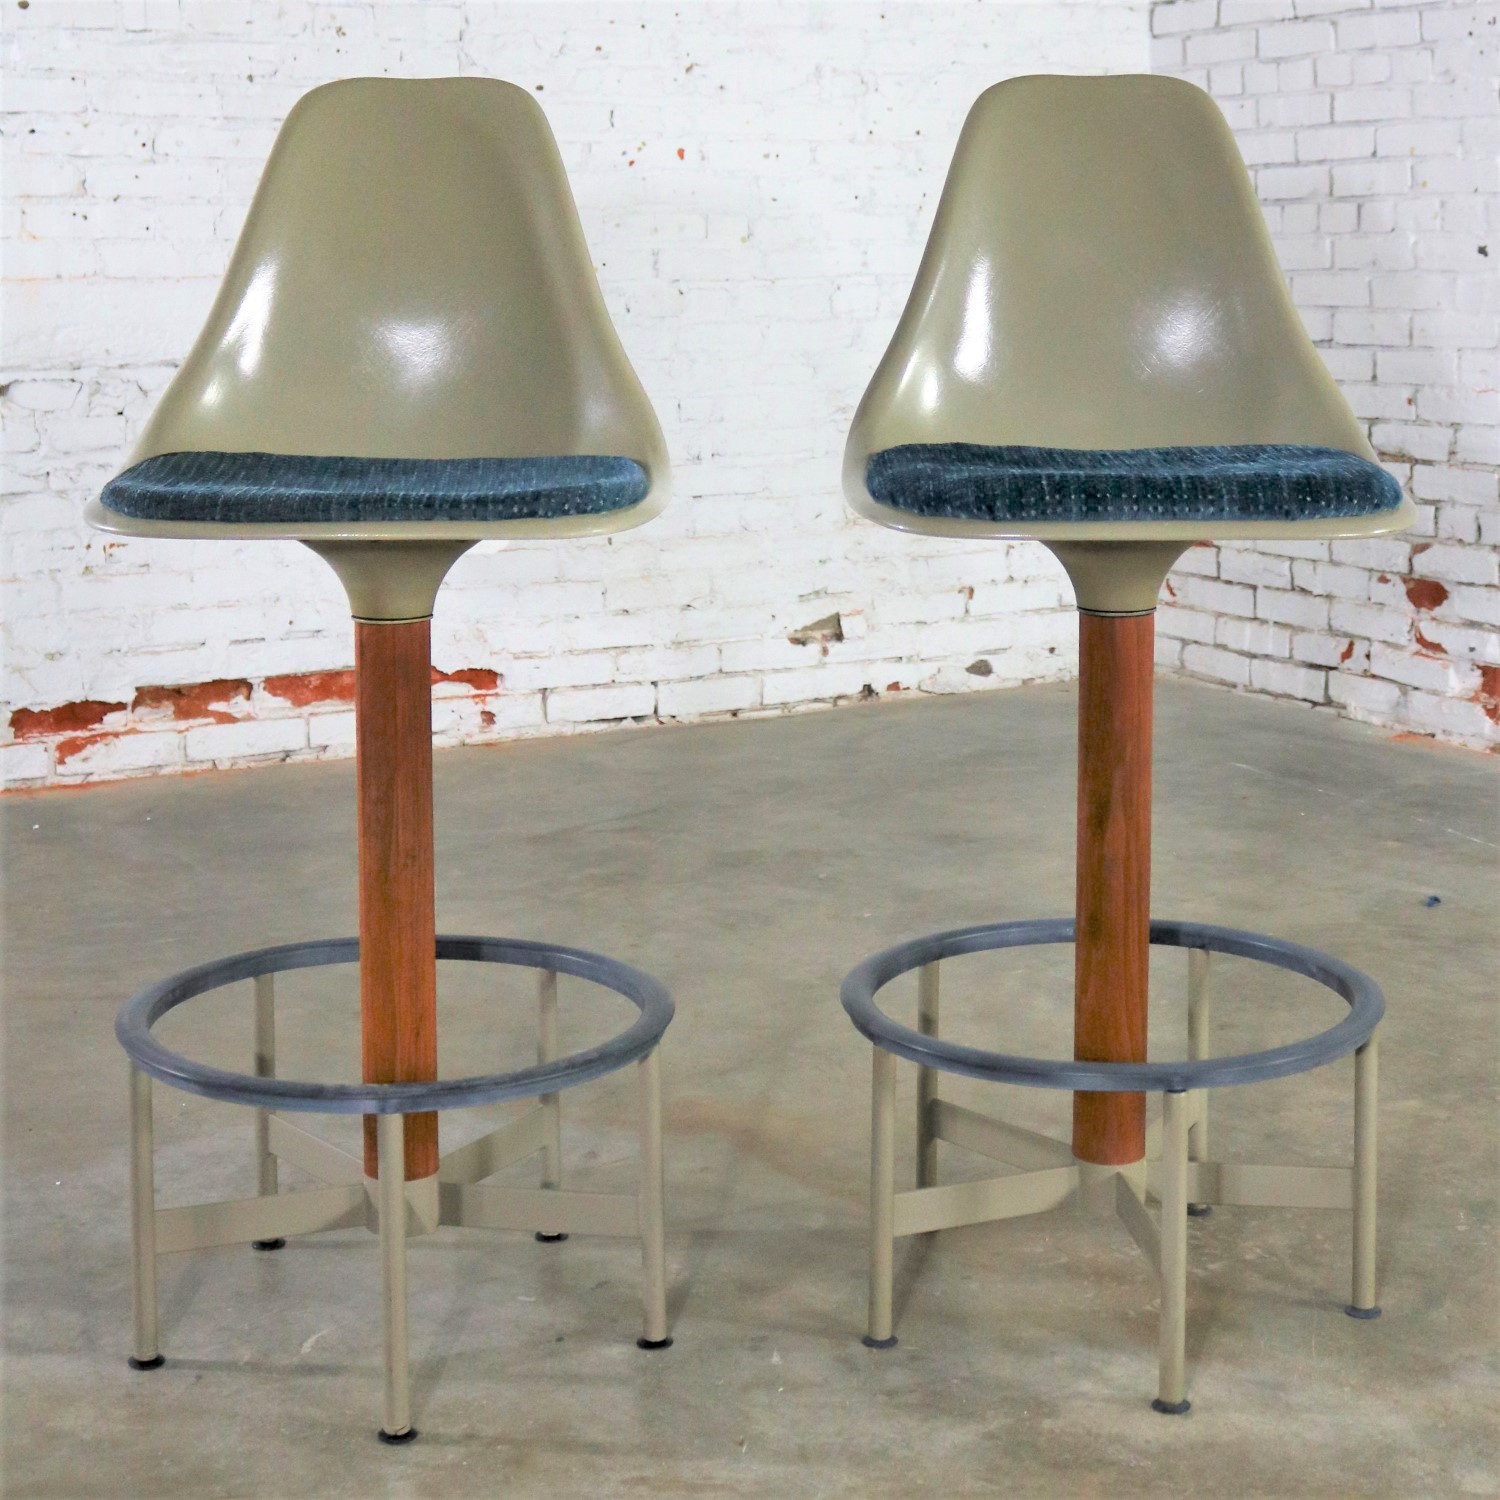 Pair of Burke Swivel Bar Stools Mid Century Modern Fiberglass Shell and Upholstered Seat Pads